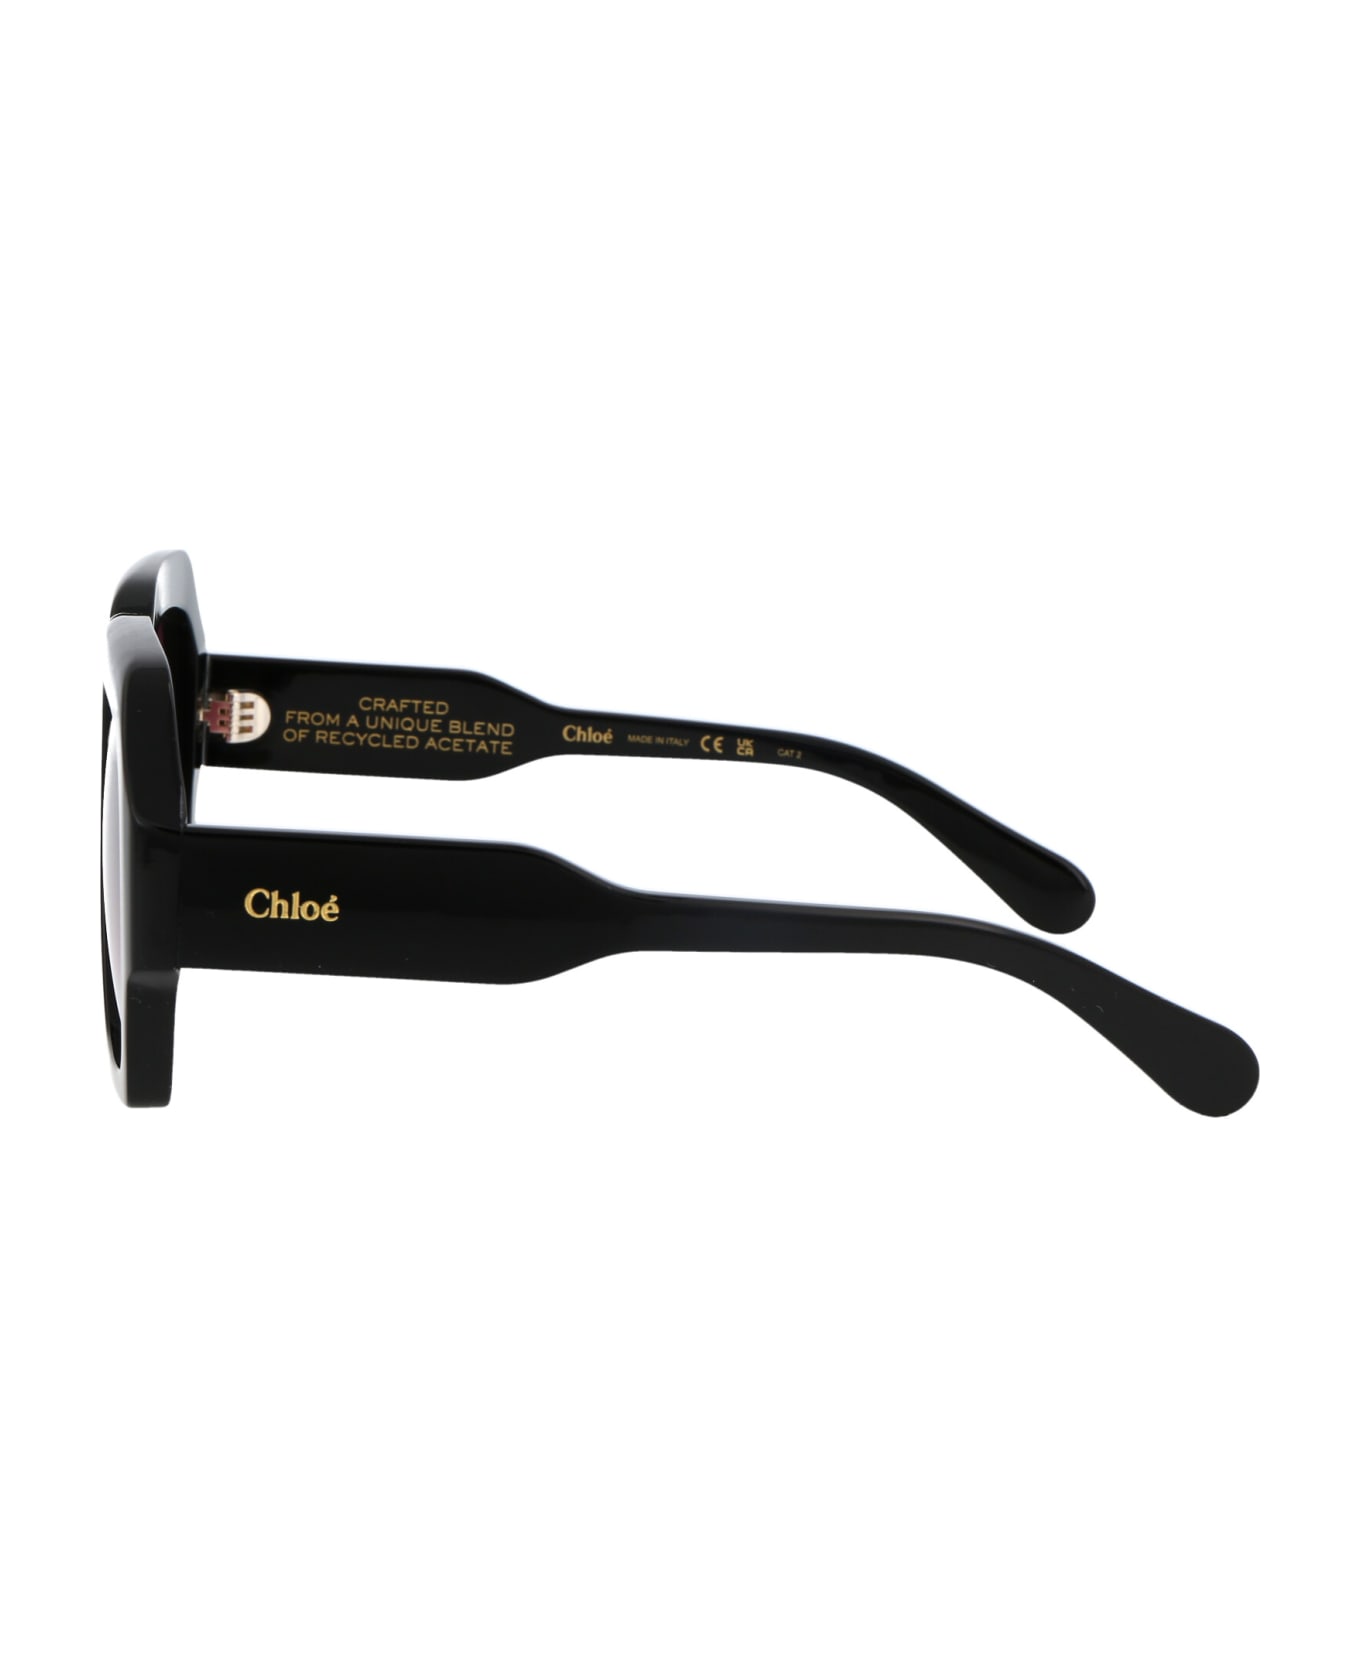 Chloé Eyewear Ch0154s Sunglasses - 001 BLACK BLACK RED サングラス